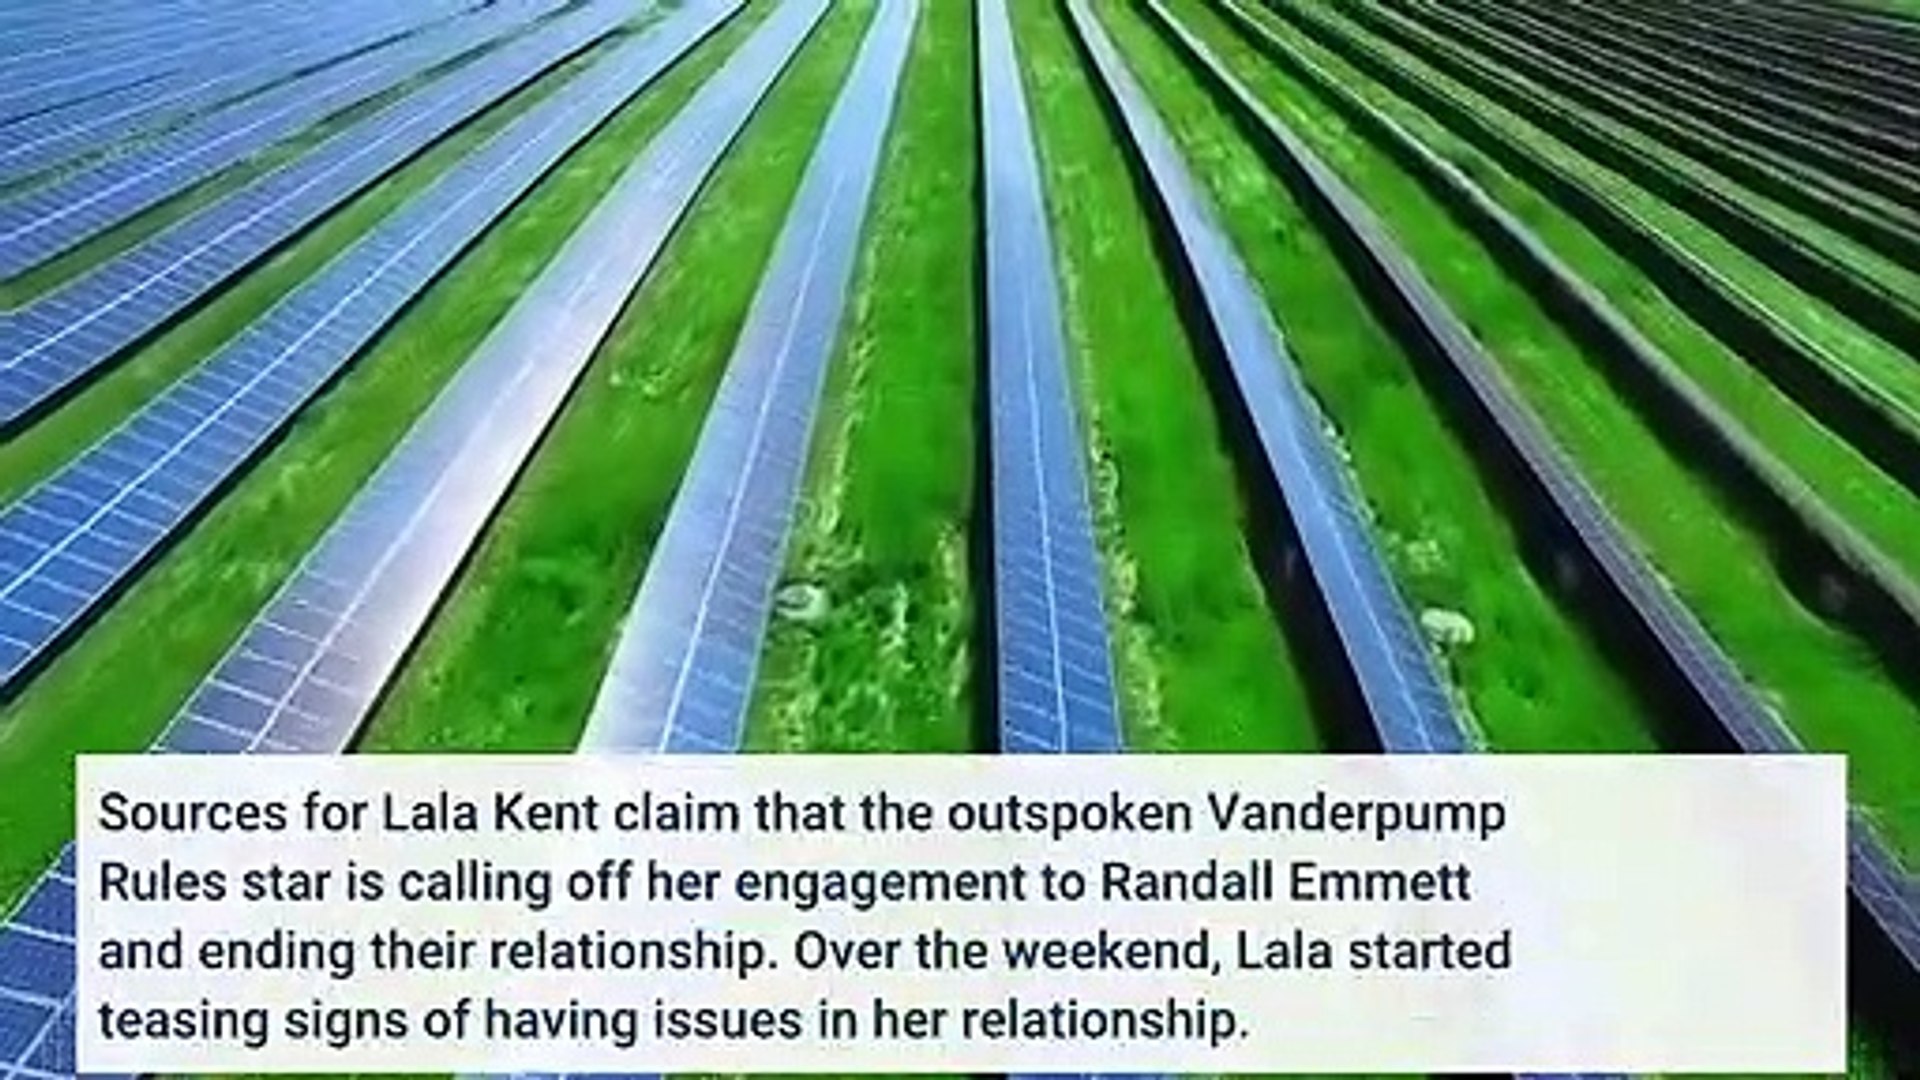 Vanderpump Rules: Lala Kent Confirms Breakup With Randall Emmett